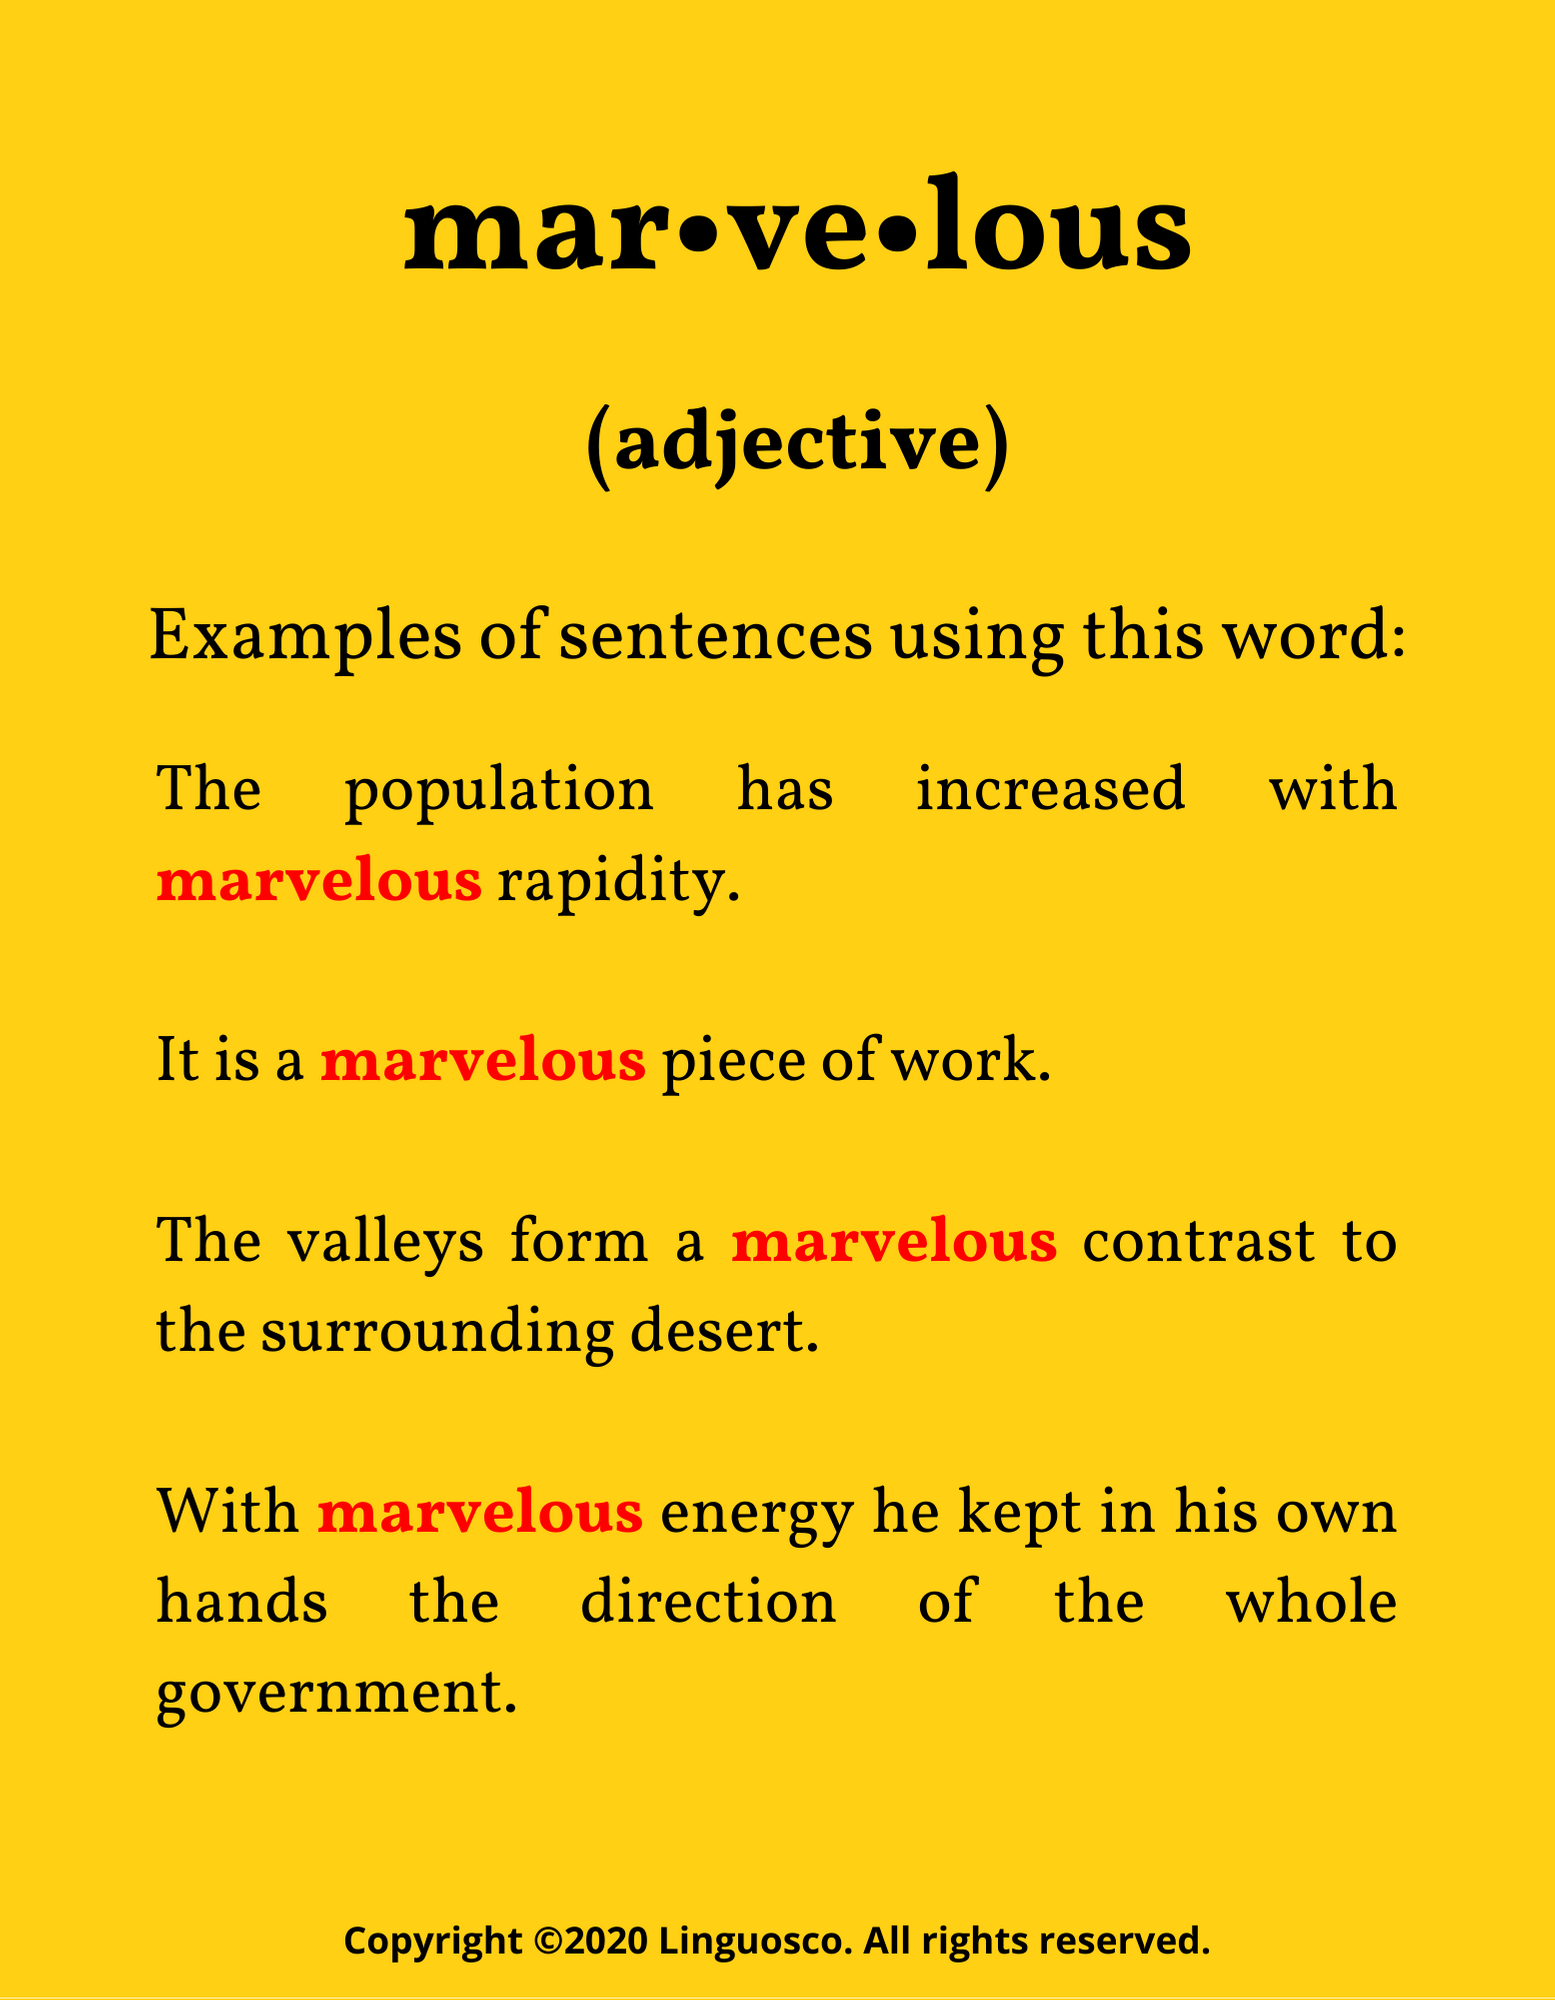 Marvelous